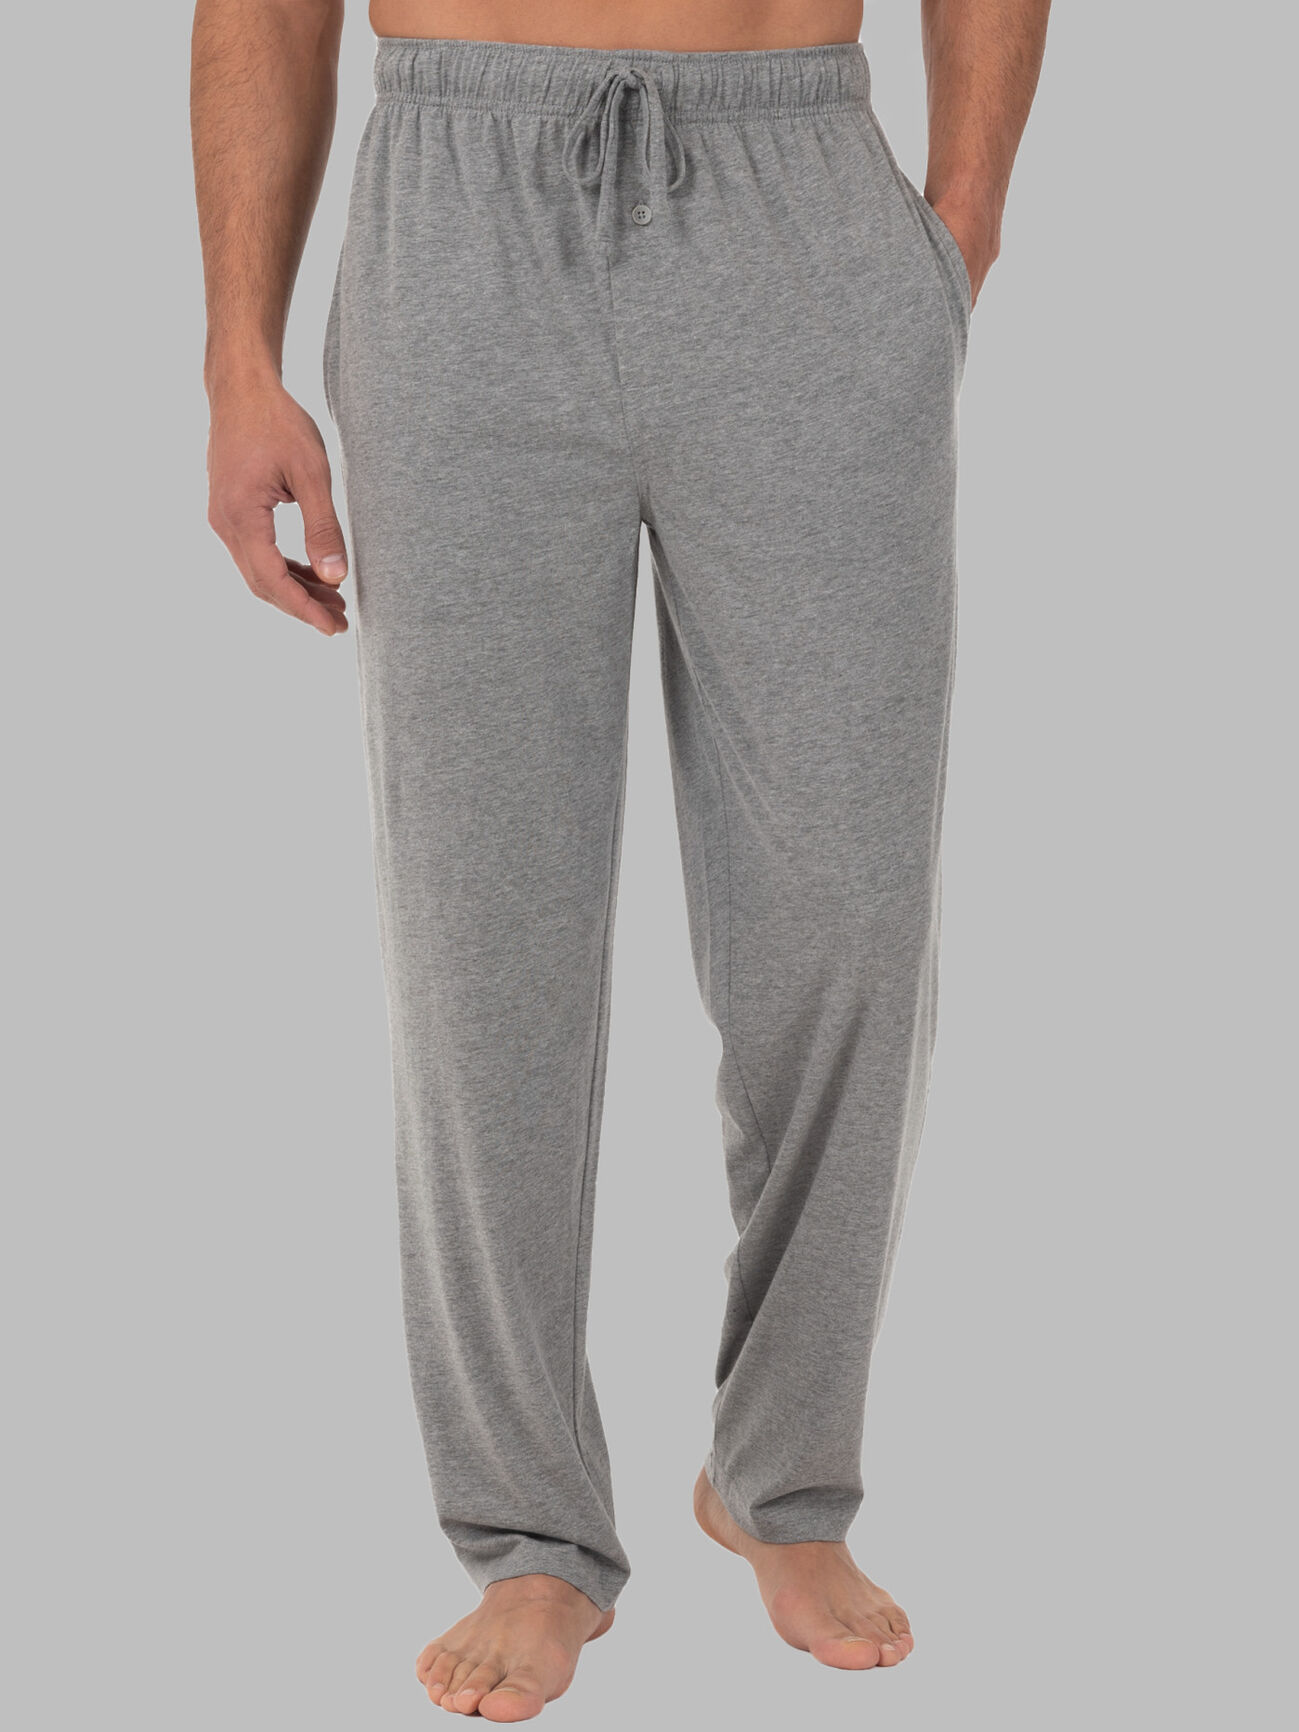 Soft Pajama Pants For Women, Pull Up Elasticated Comfy Bottoms, Wide Leg  Fuzzy Pj Pants, Super Soft Sleepwear